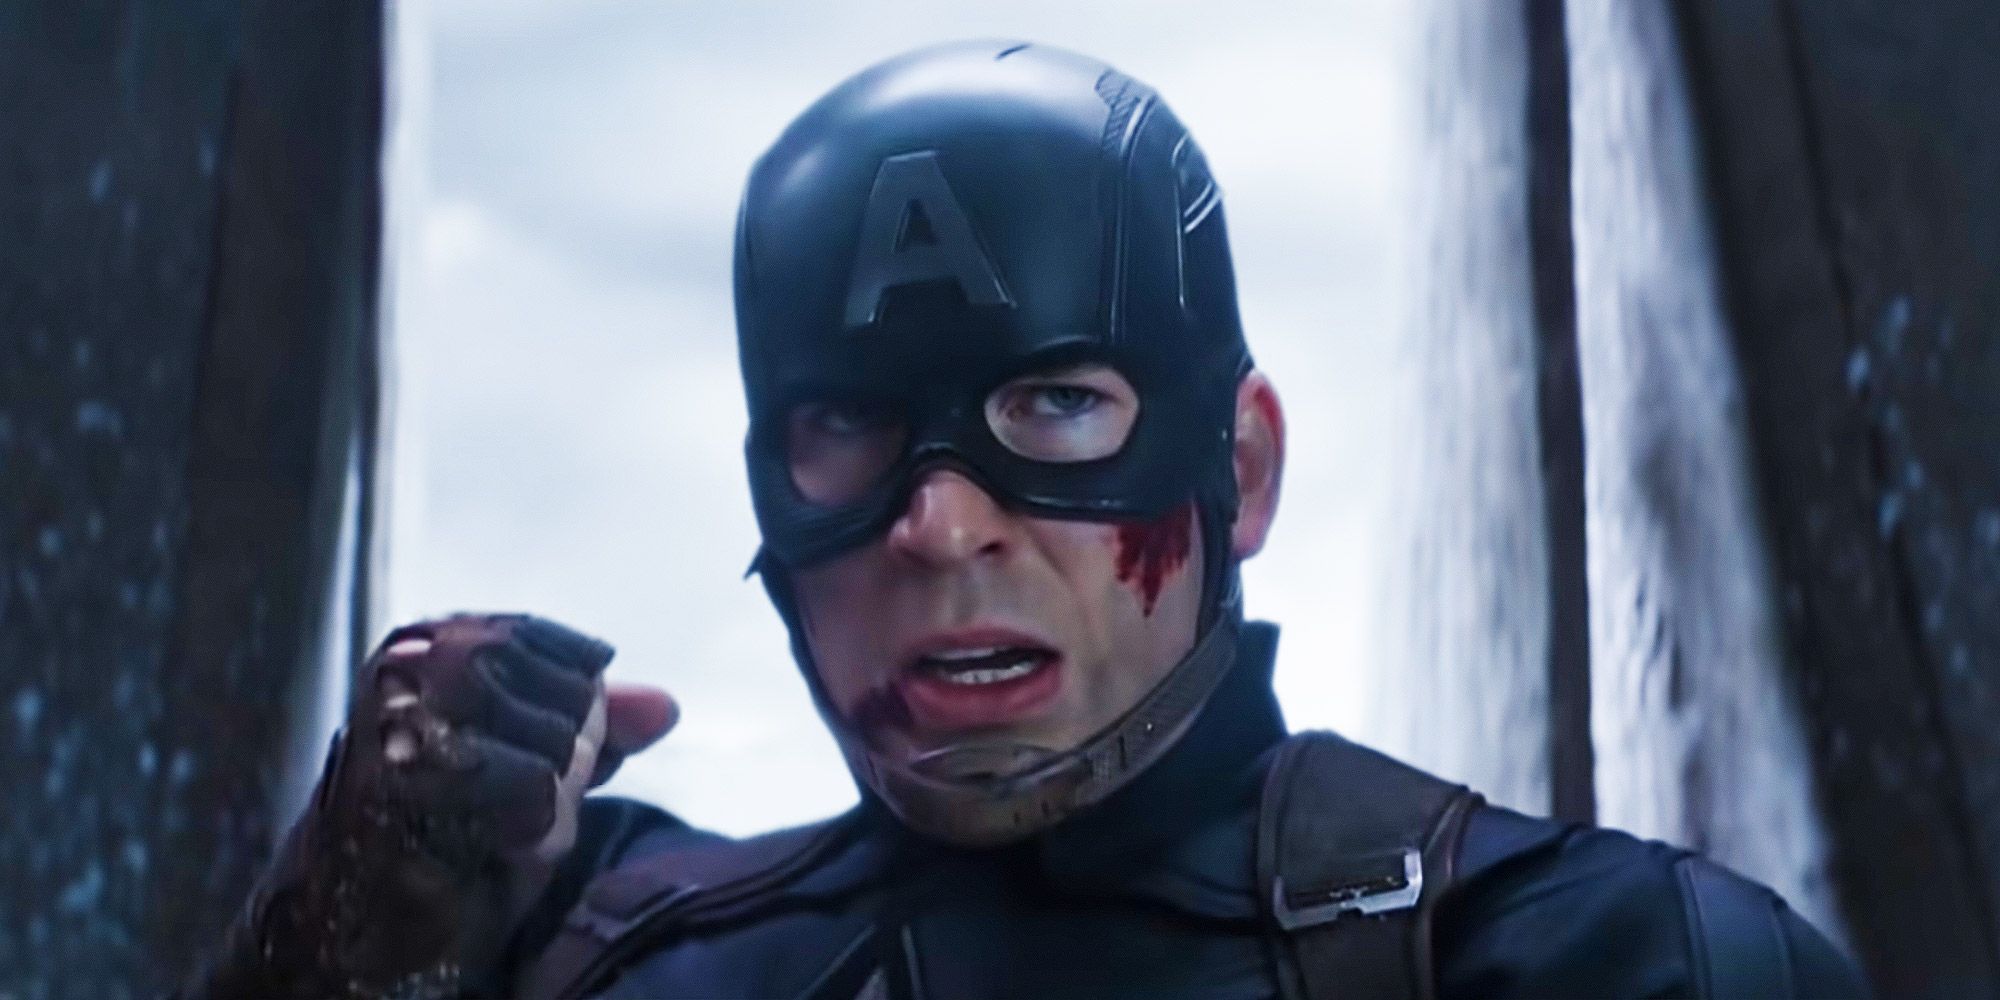 Captain America preparing to fight in the Civil War